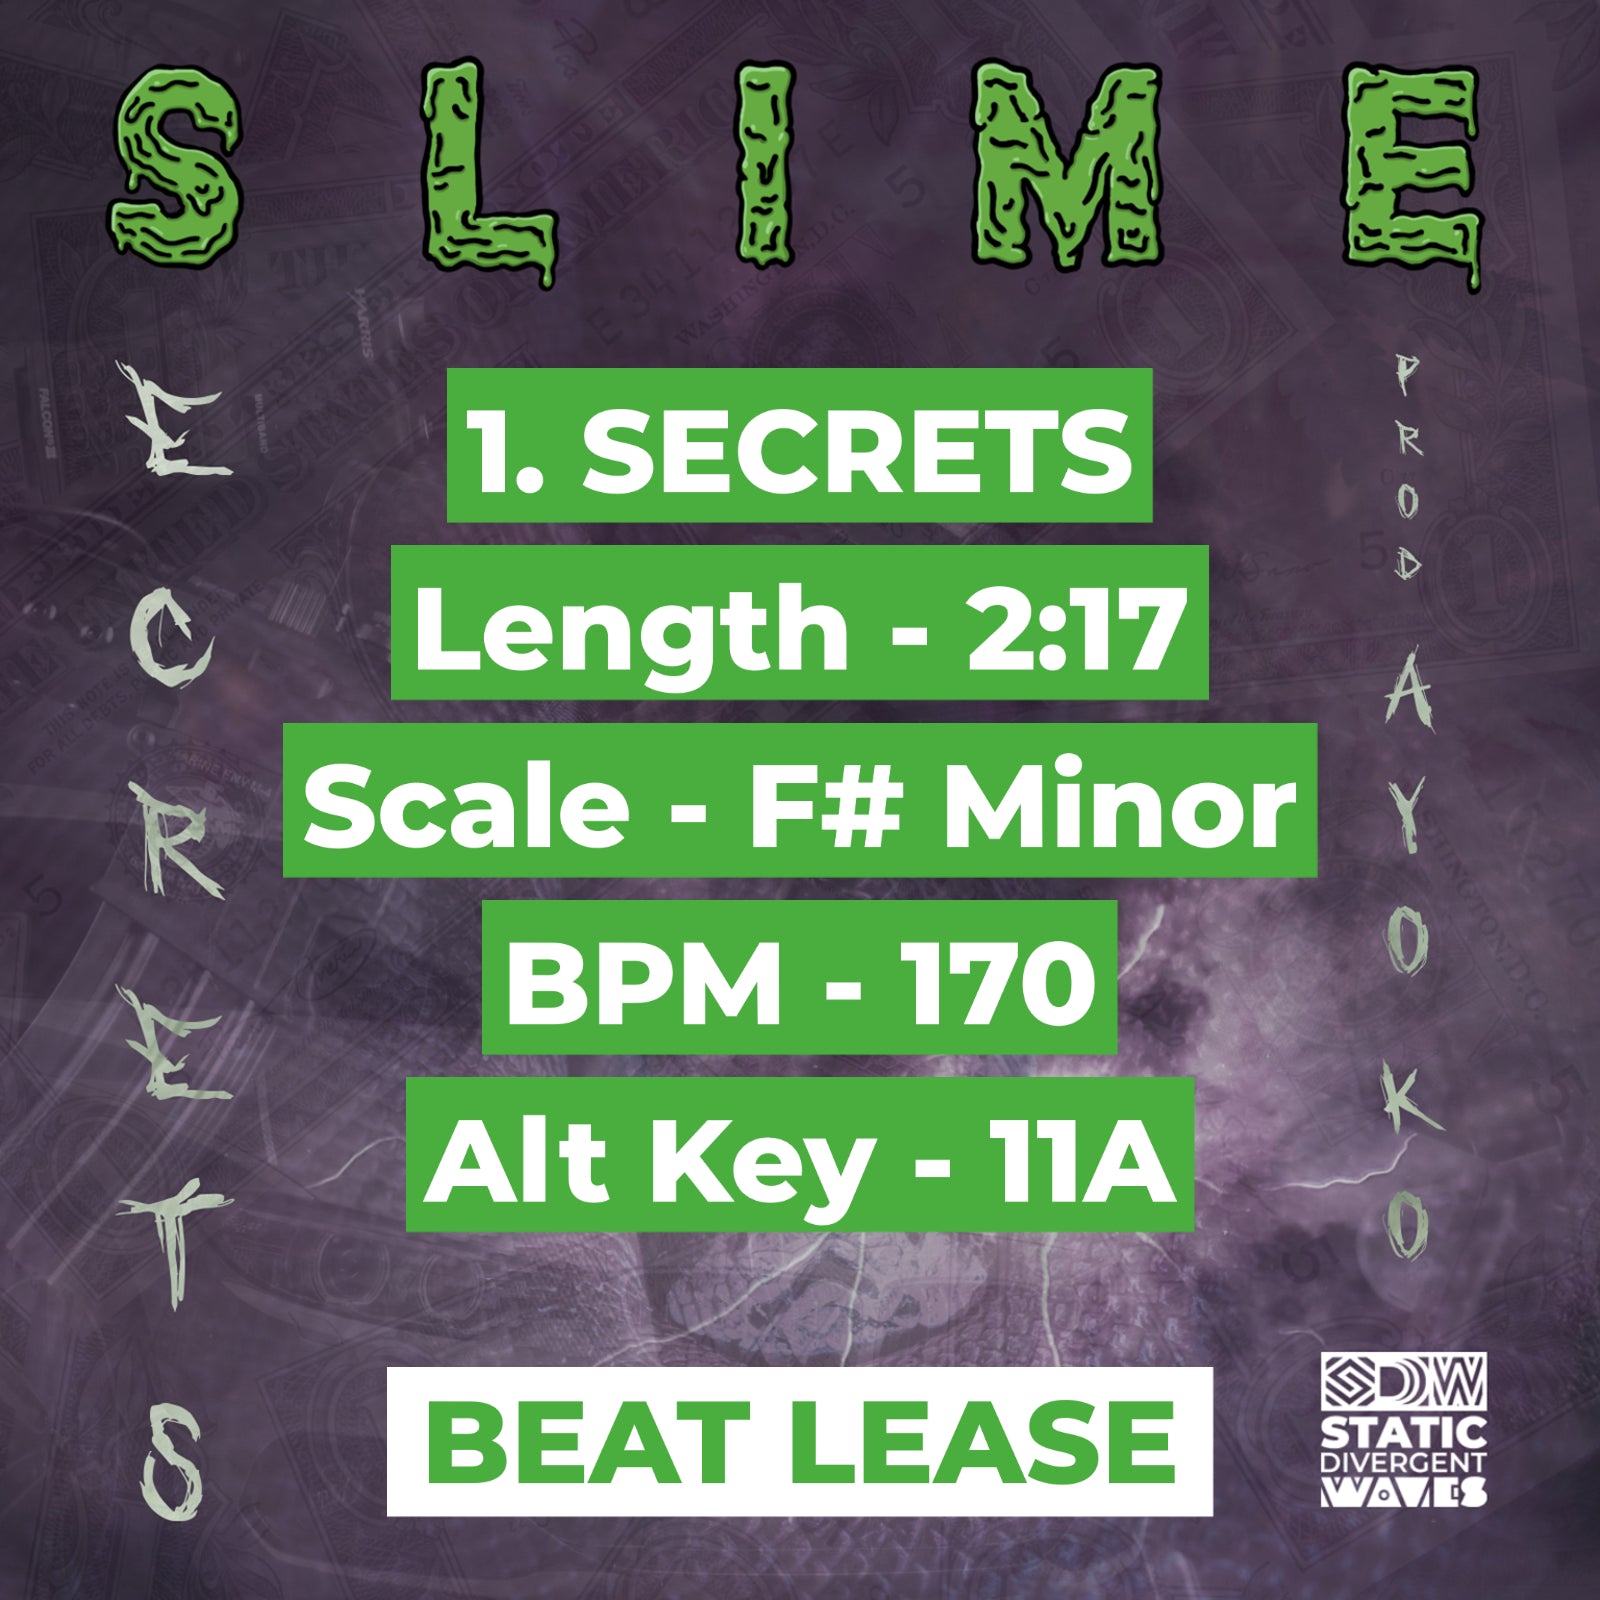 Slime Secrets Full Beat Tape / Instrumental Lease - 12 Beats by Ayo KO